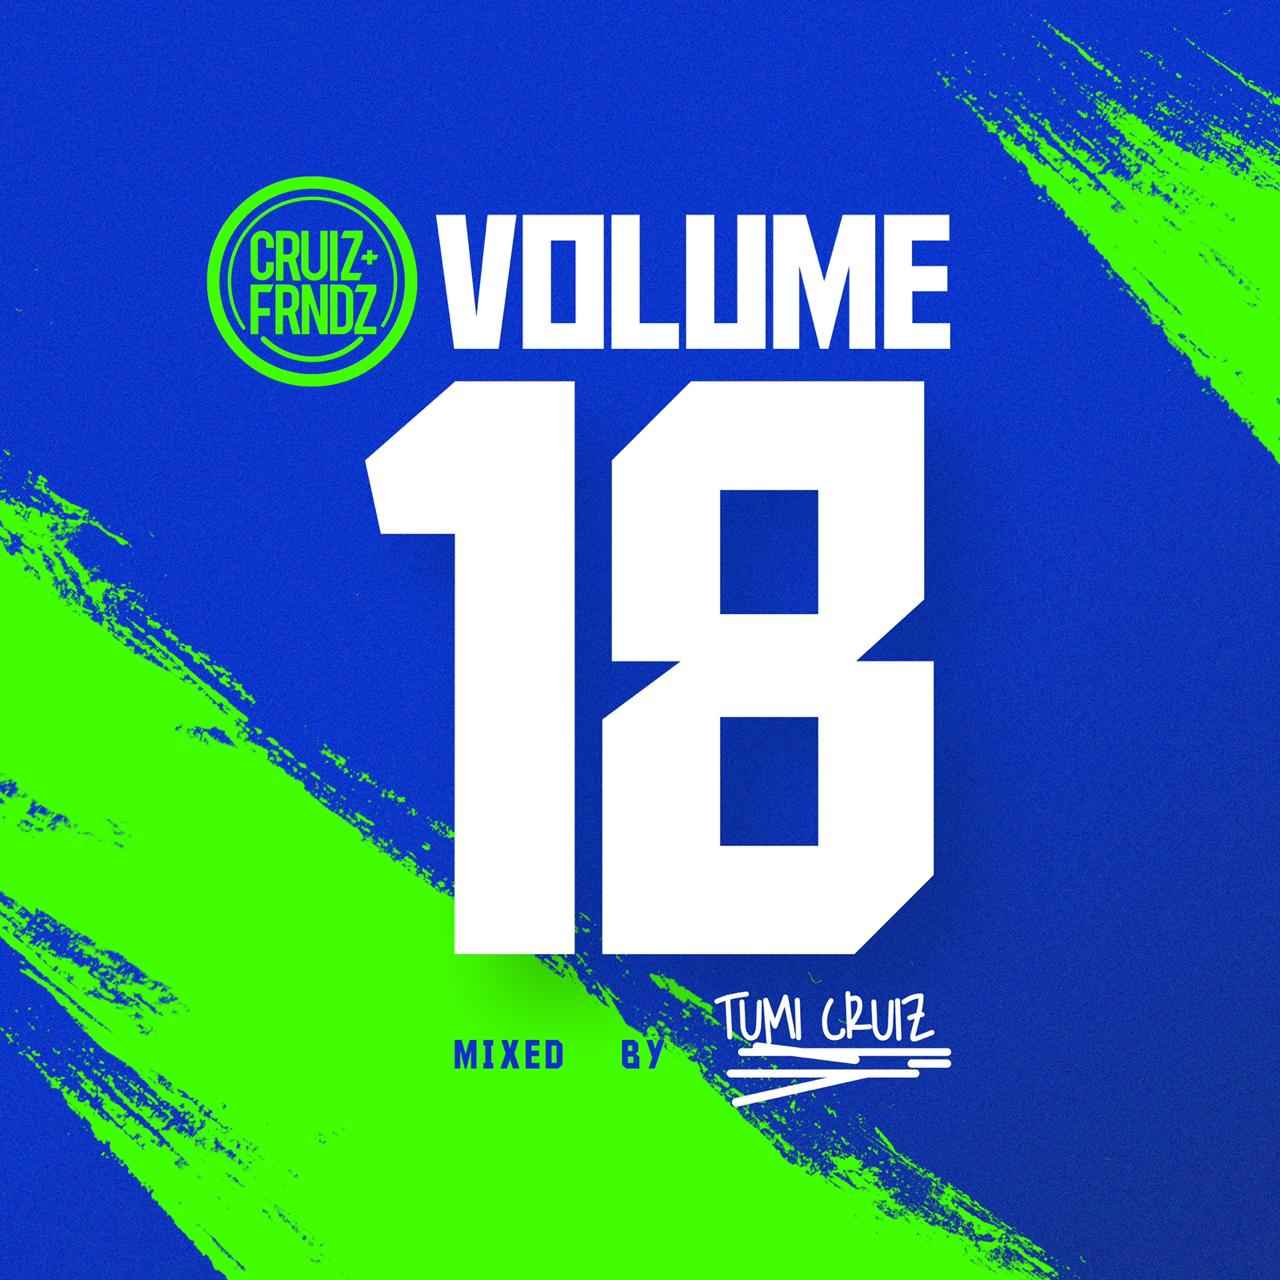 Tumi Cruiz Cruiz & friends Vol. 18 Mix